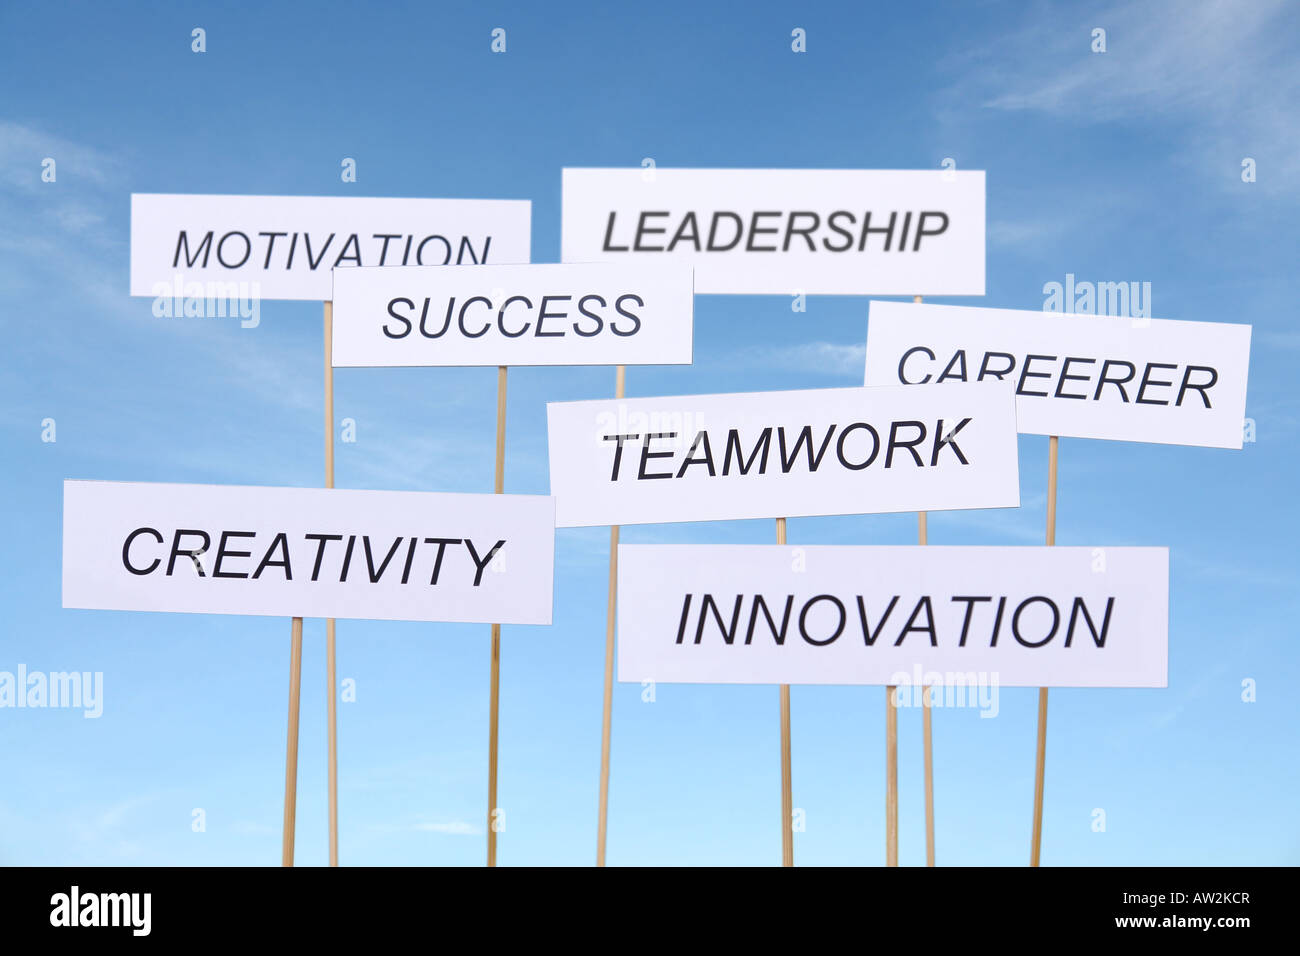 Set of white banners with business slogans - Innovation, Creativity, Teamwork, Careerer, Success, Motivation and Ledership Stock Photo